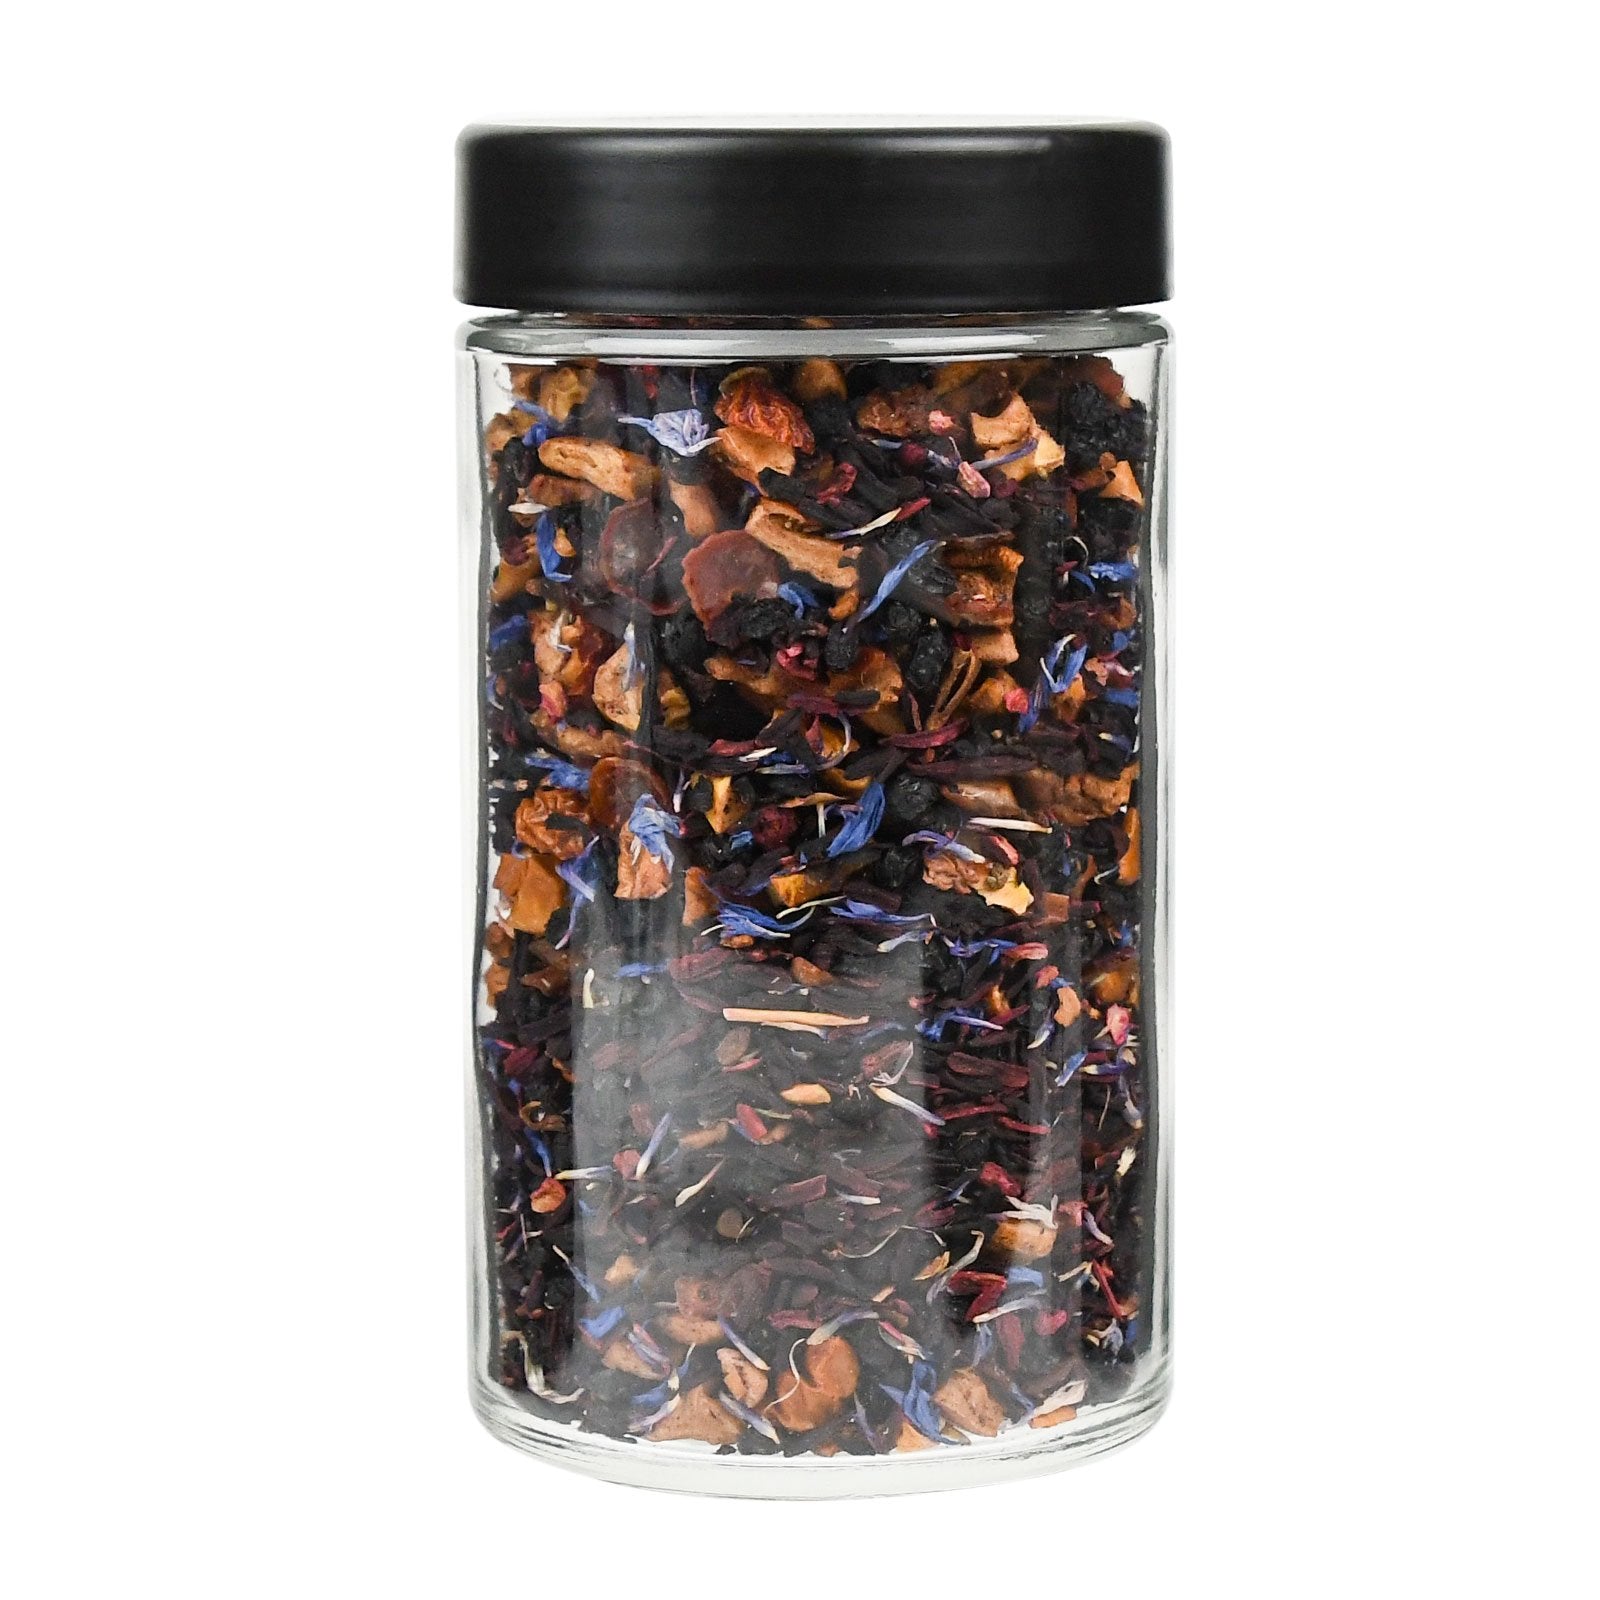 10oz Child Resistant Glass Jars With Black Caps - 14 Grams - 1 Count